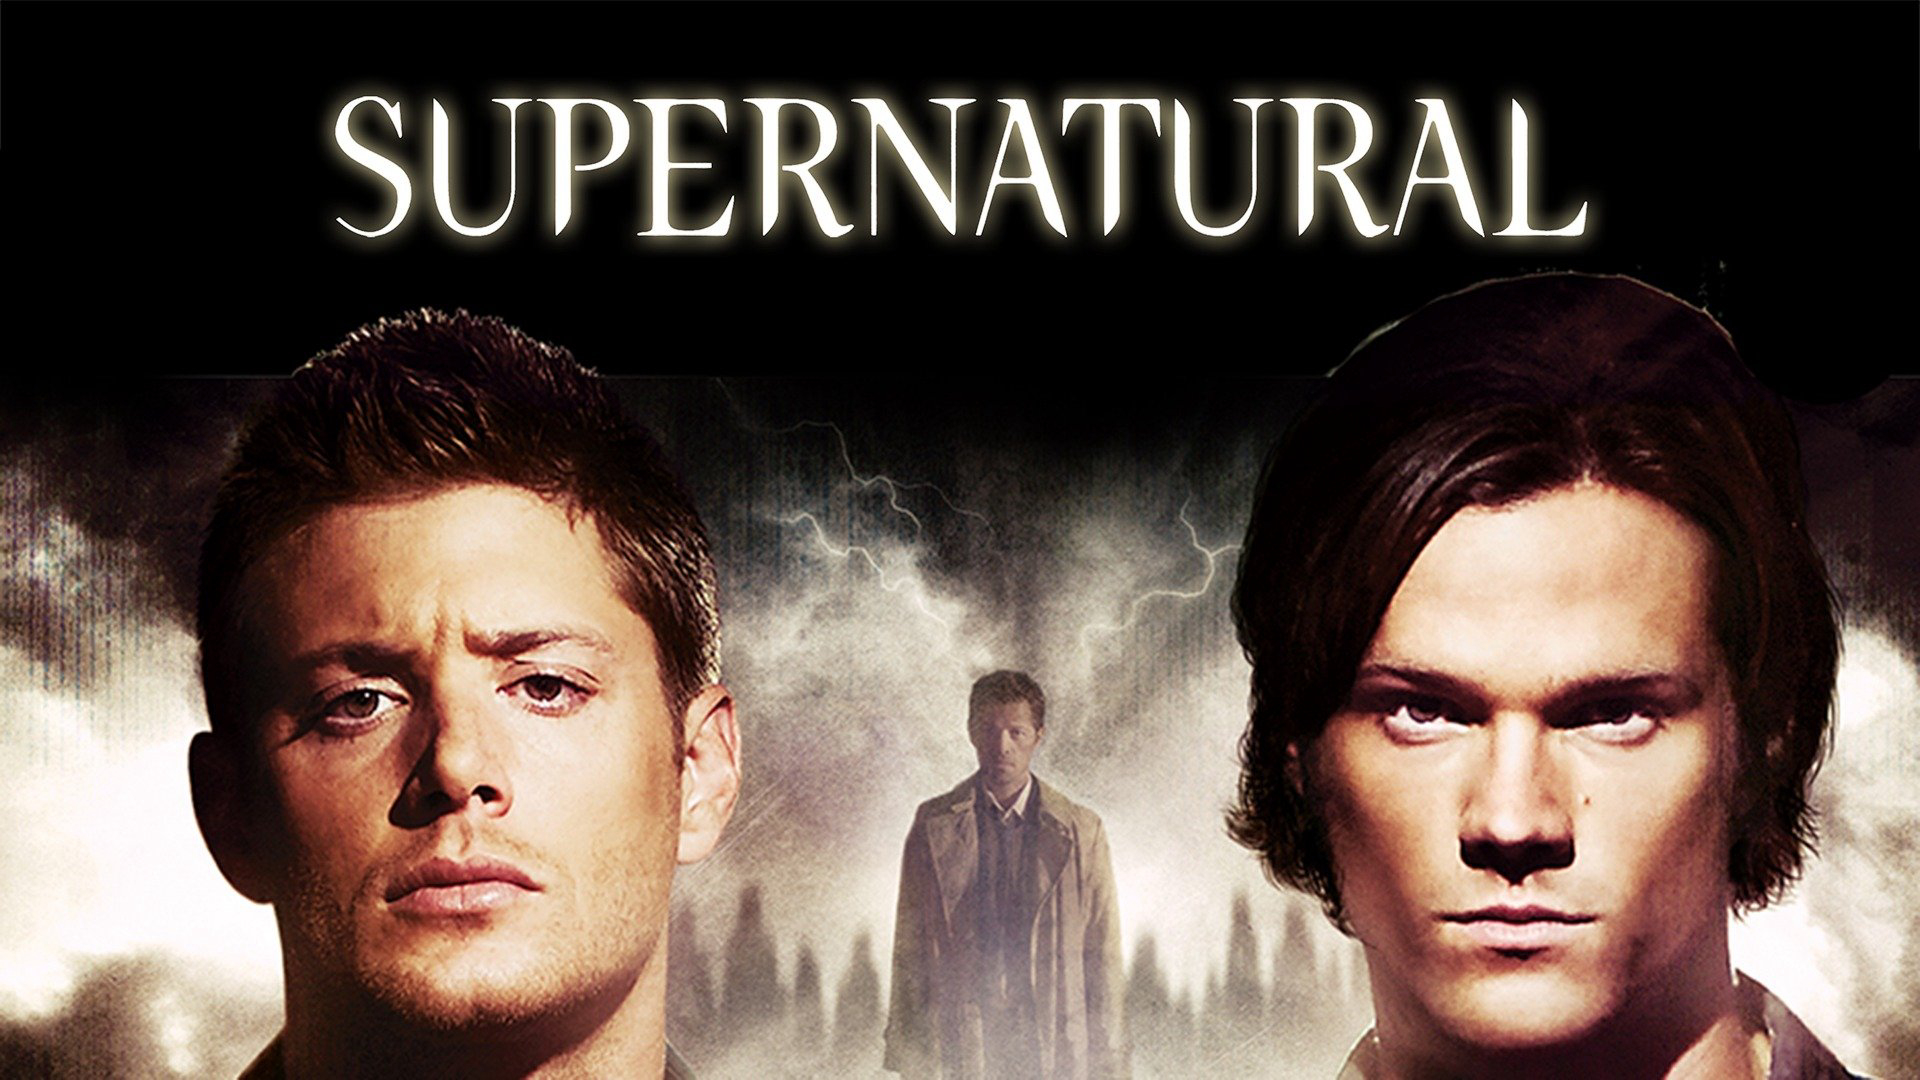 Supernatural (Season 4) / Supernatural (Season 4) (2008)